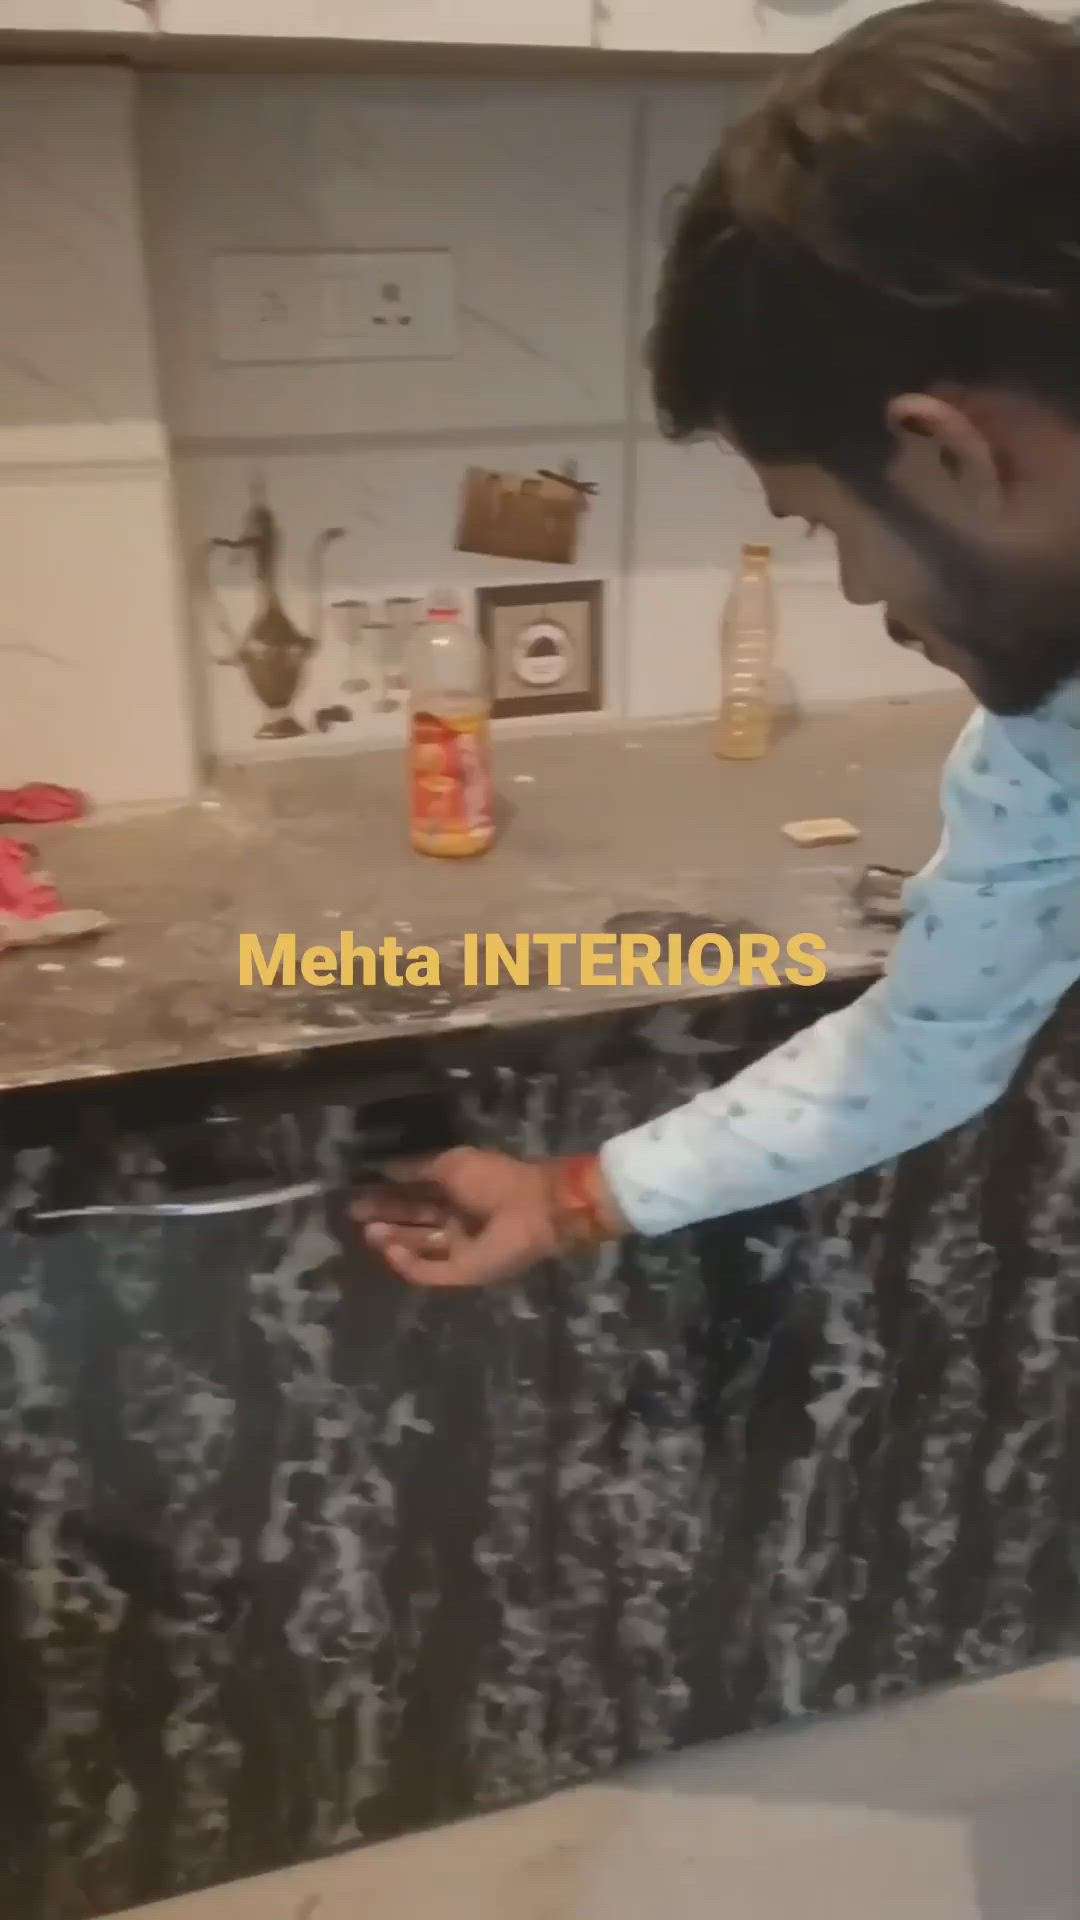 Mehta INTERIORS